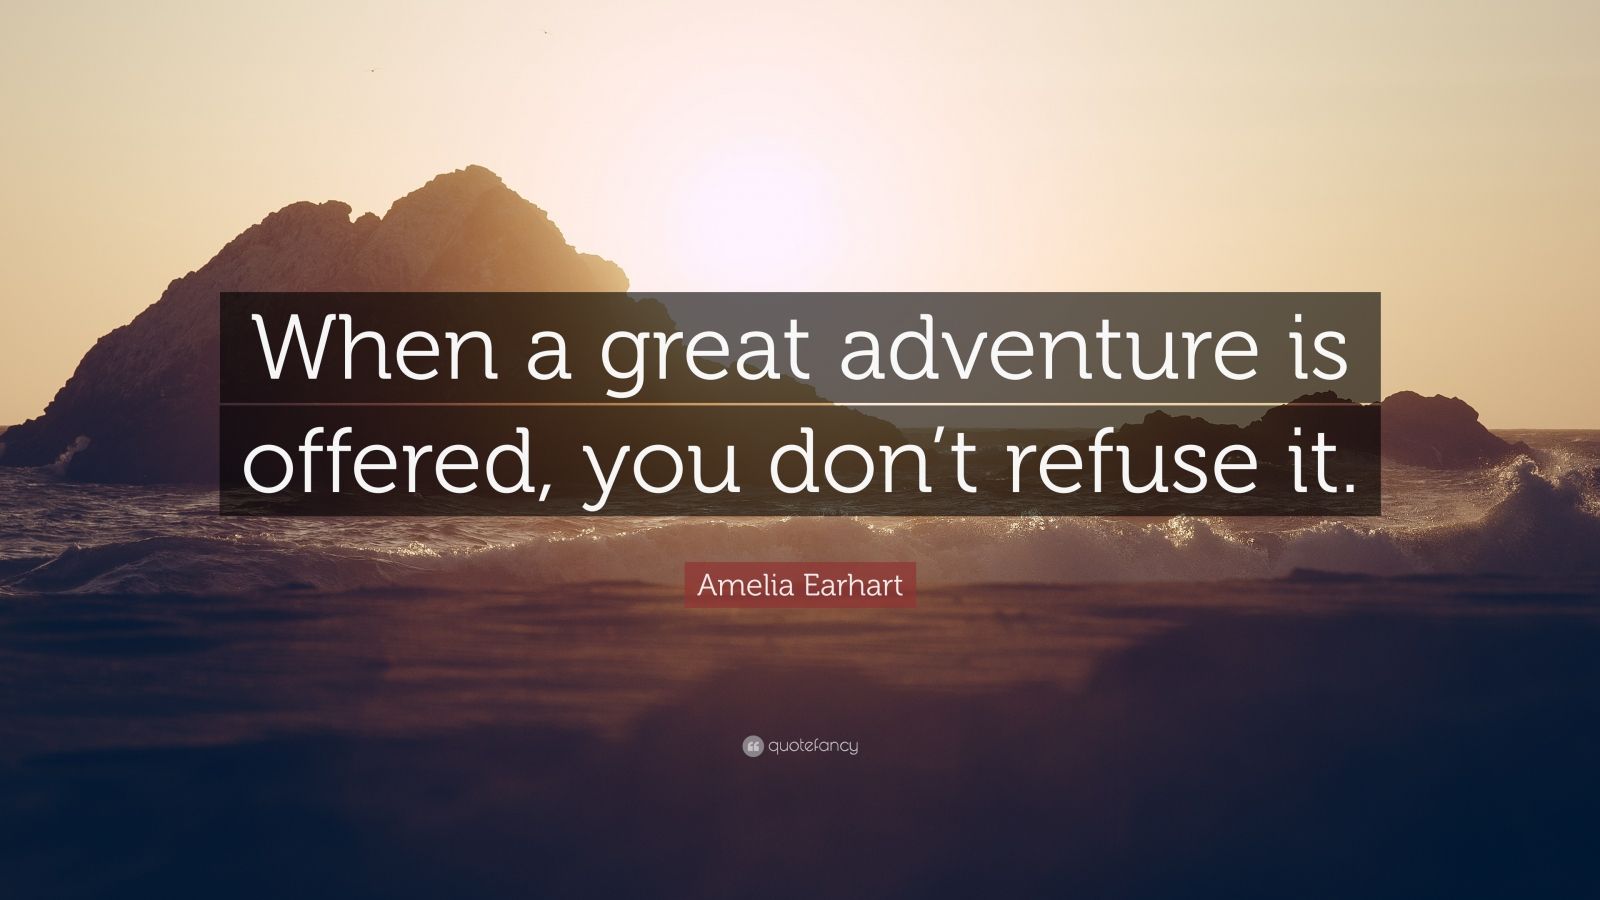 Amelia Earhart Quotes (52 wallpapers) - Quotefancy